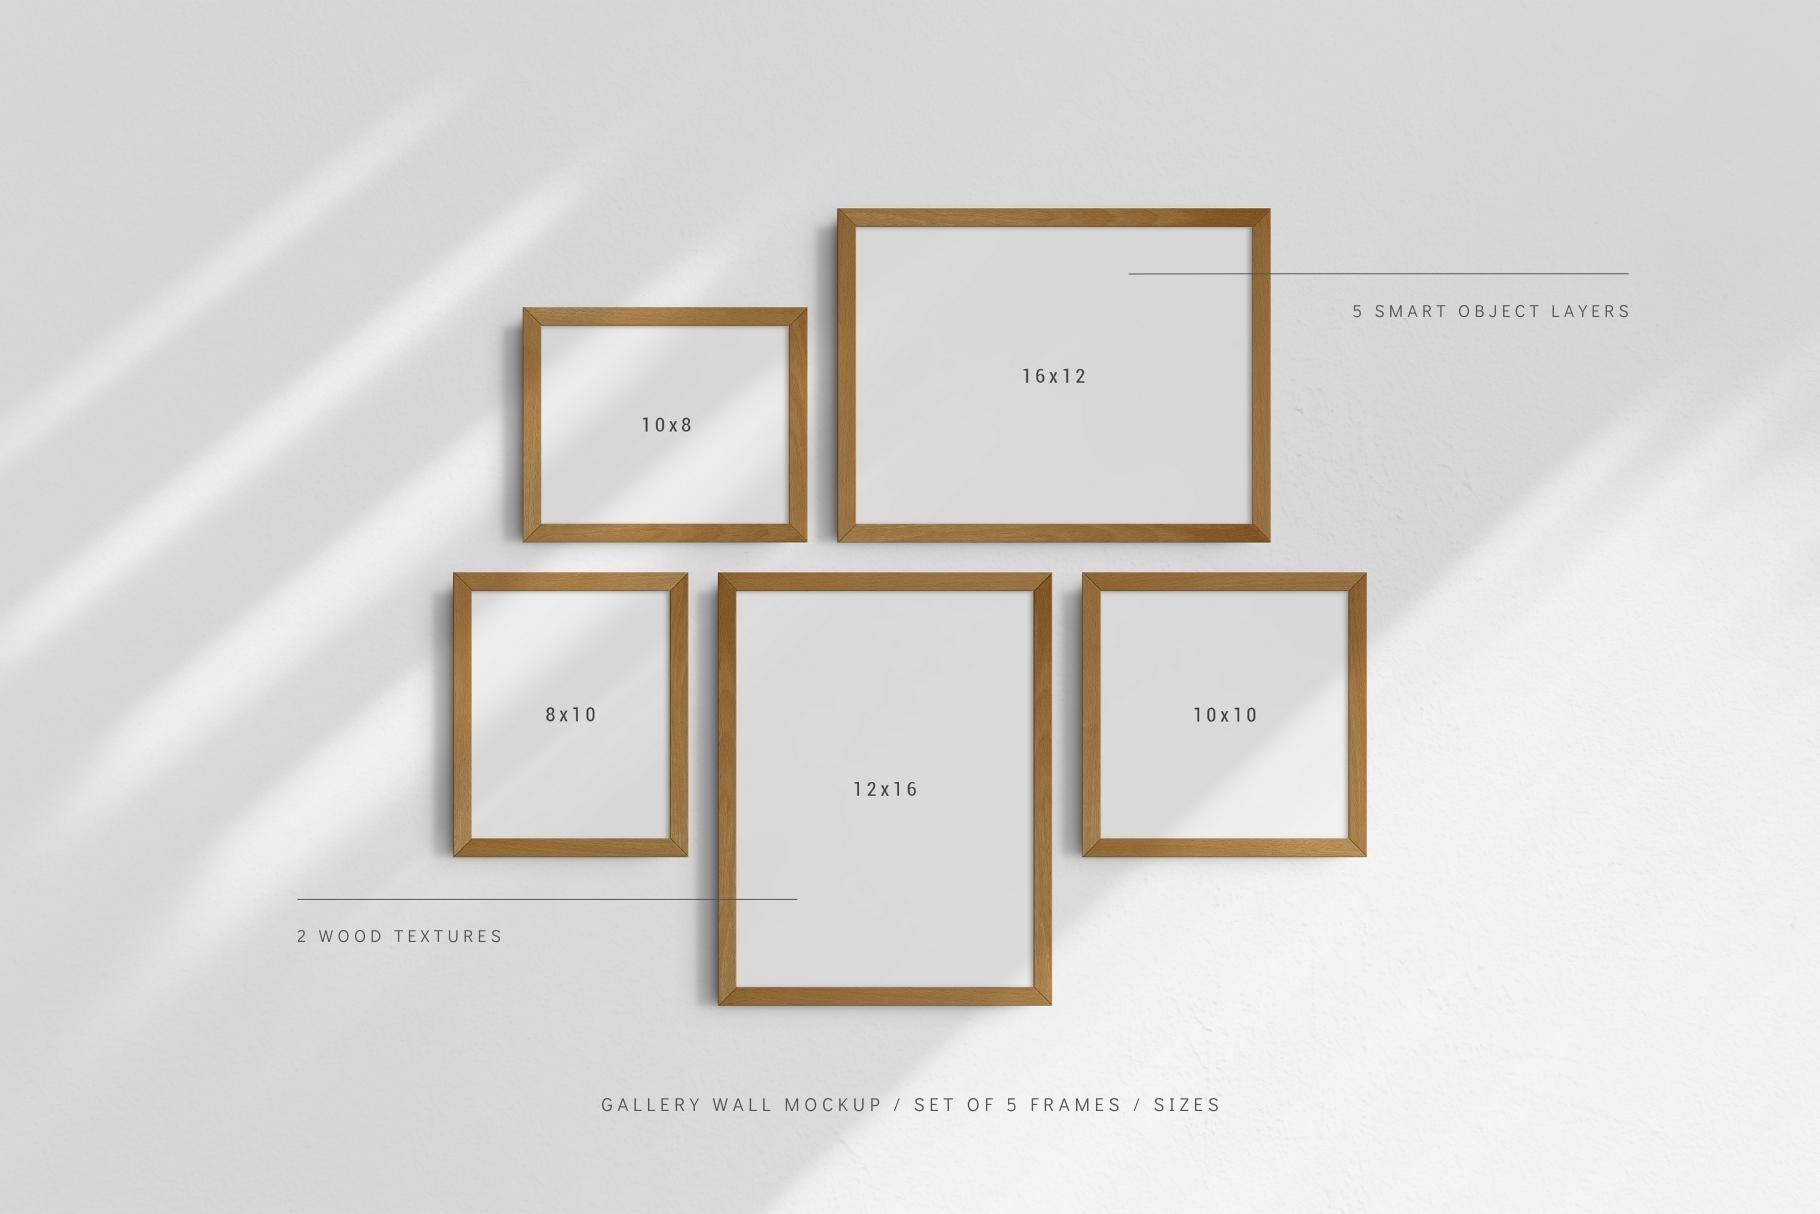 Gallery Wall Mockup | Set of 5 Frames | Frame Mockup | PSD | Sizes